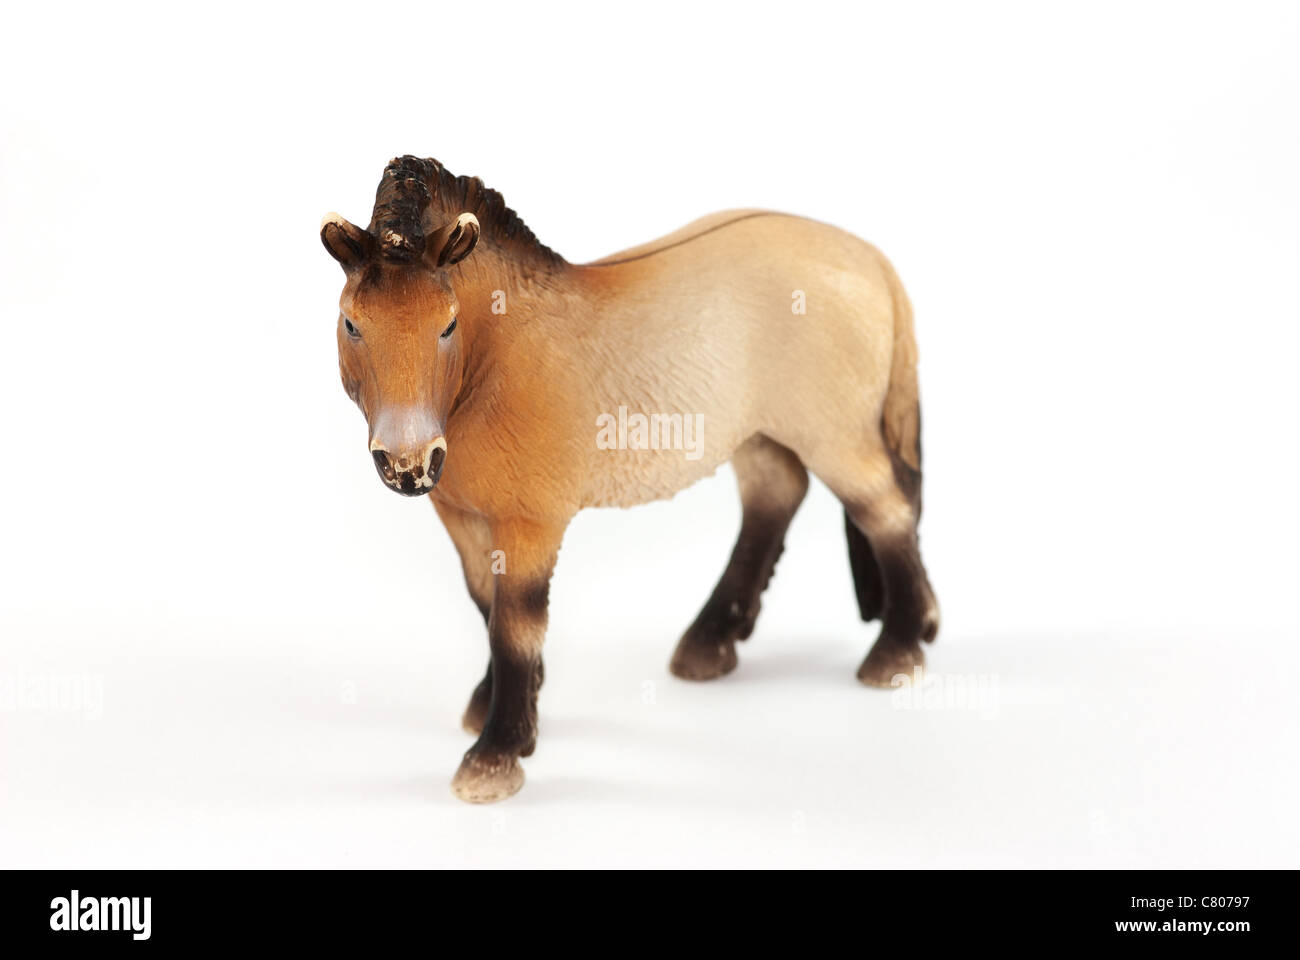 Horse toy on white background Stock Photo